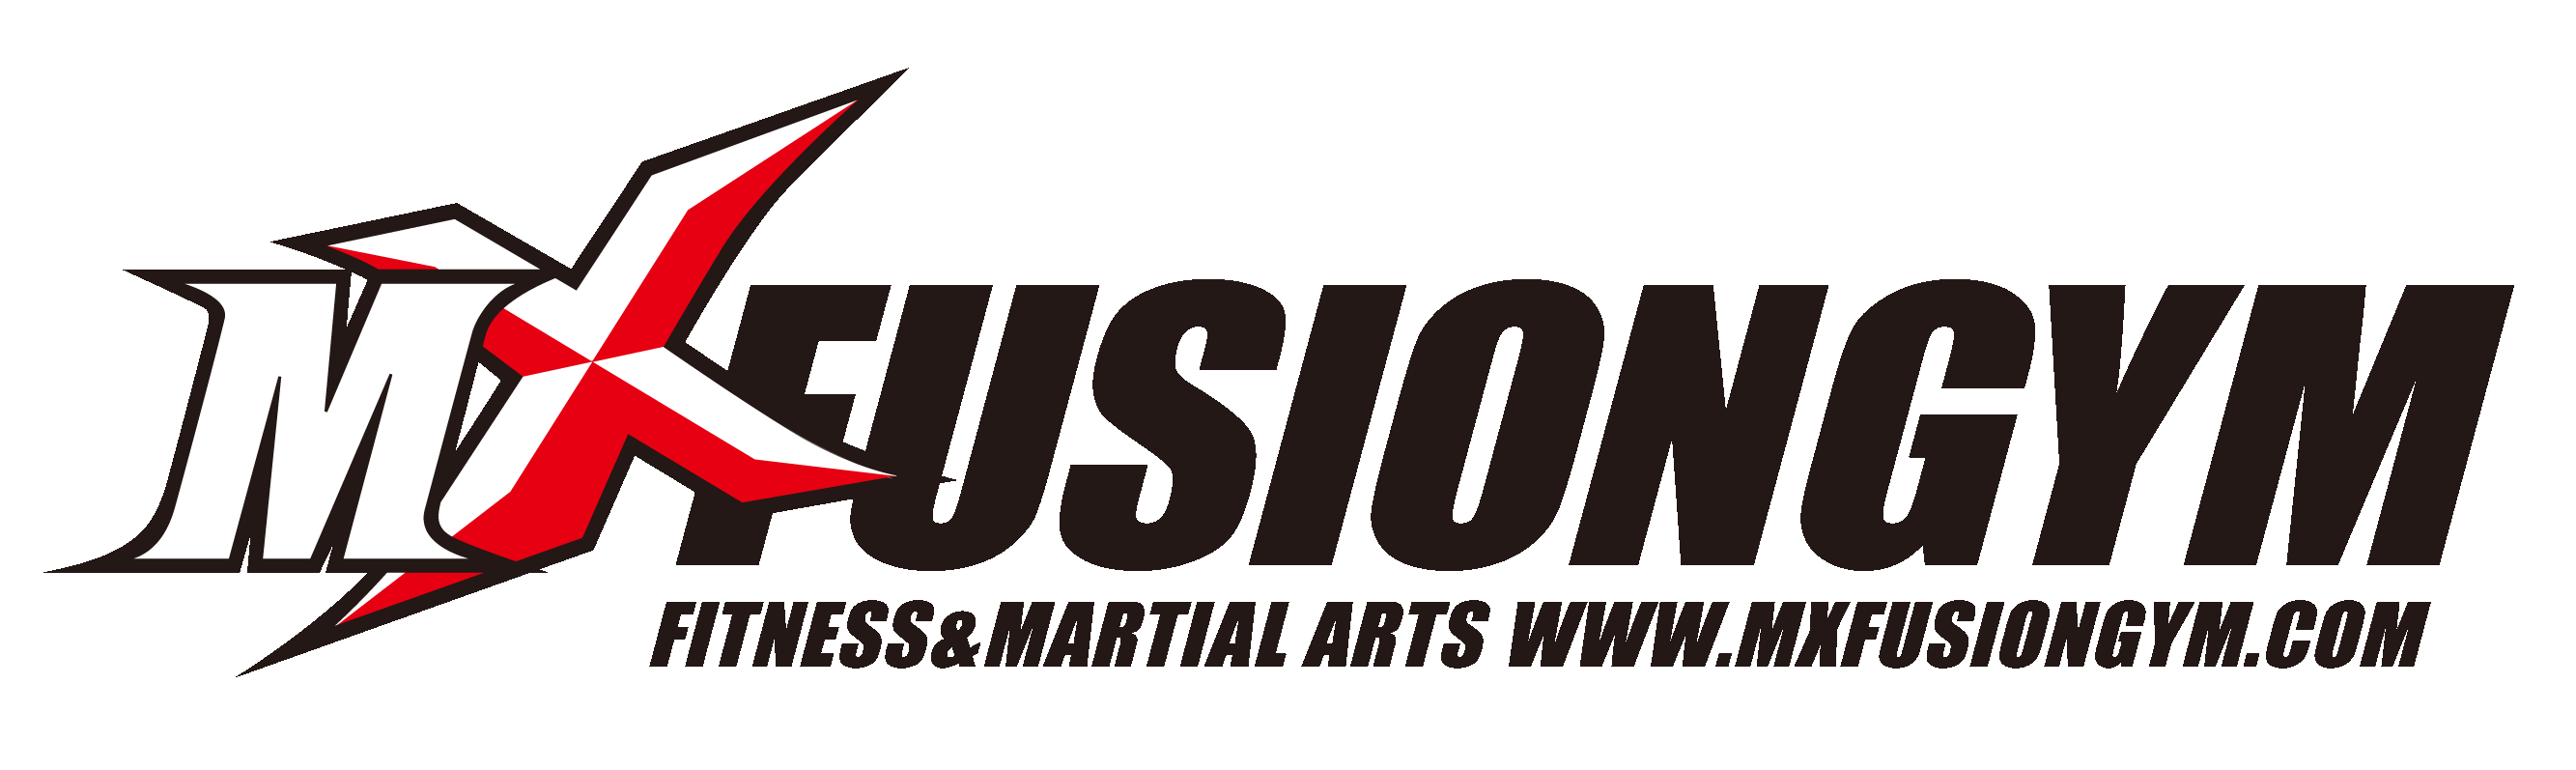 mx fusiongym logo